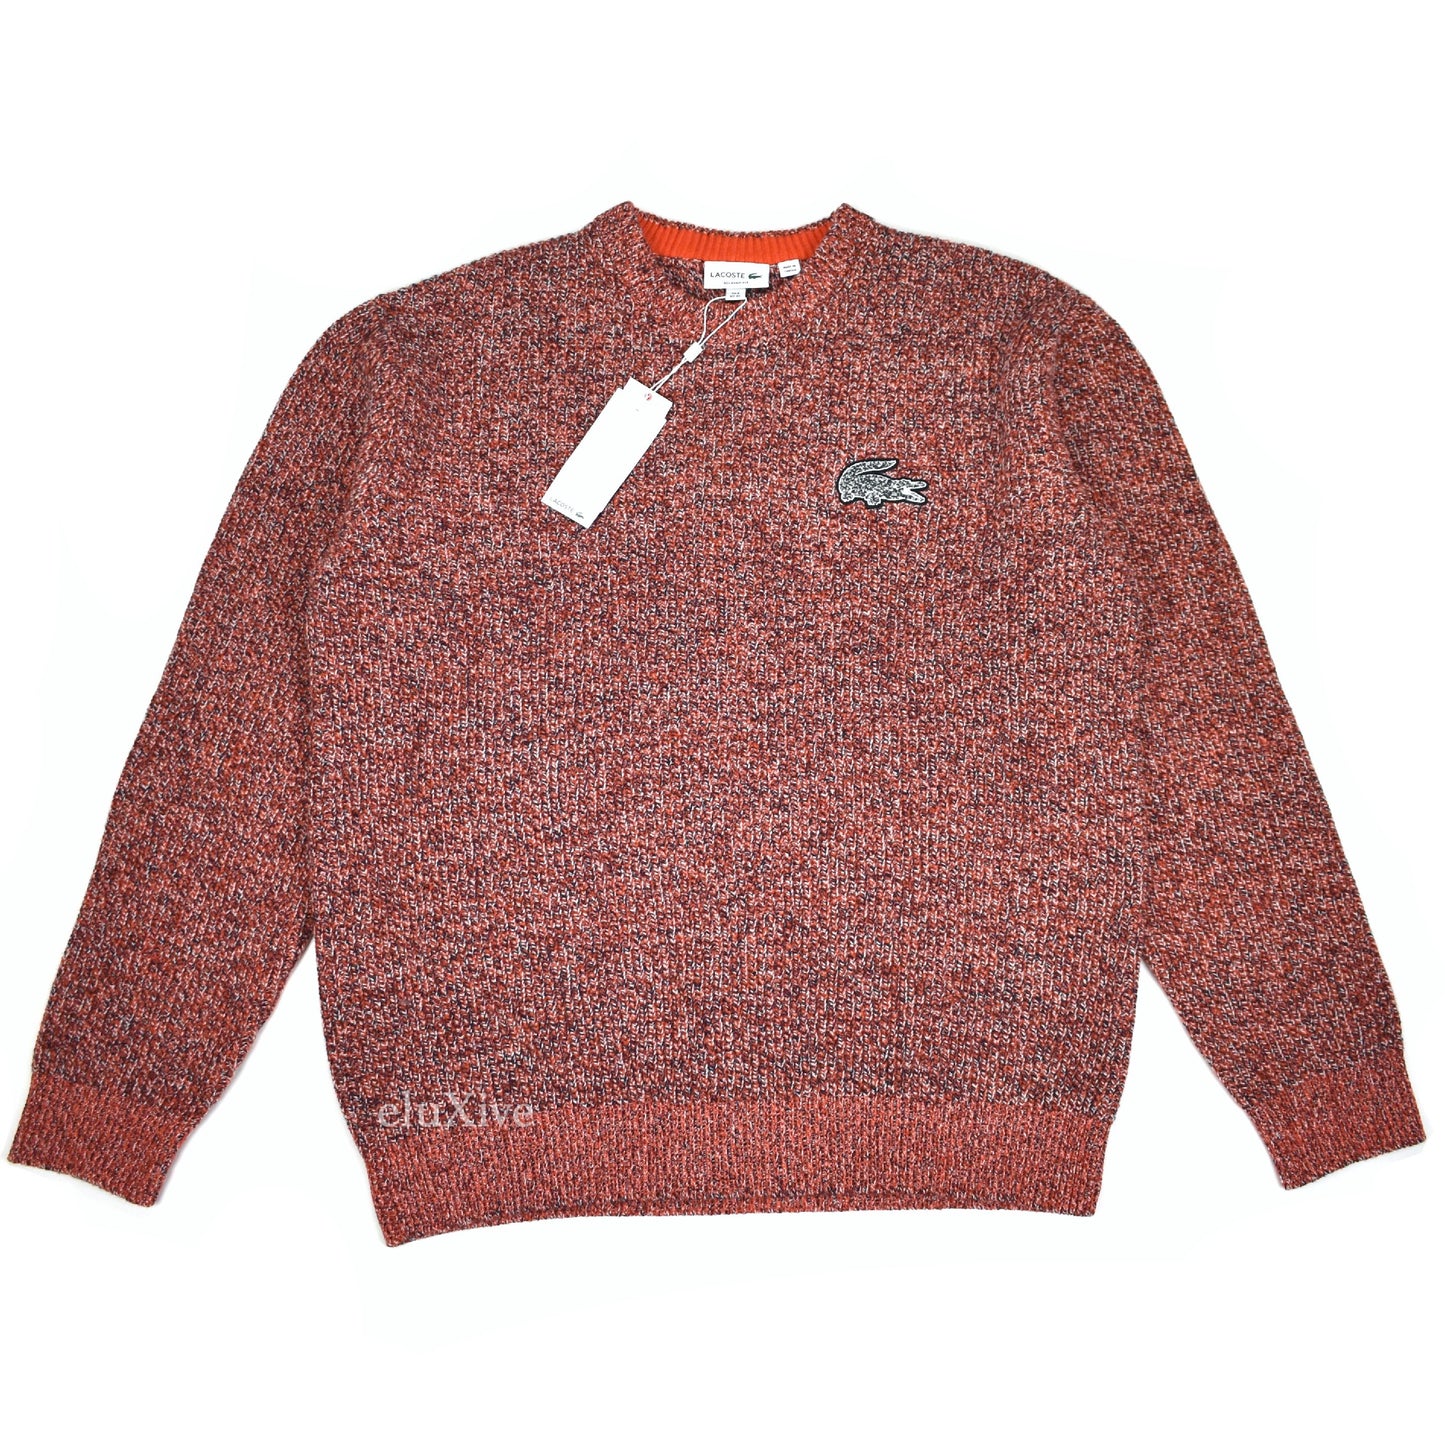 Lacoste - Heavy Knit Big Croc Logo Sweater (Orange/Red)